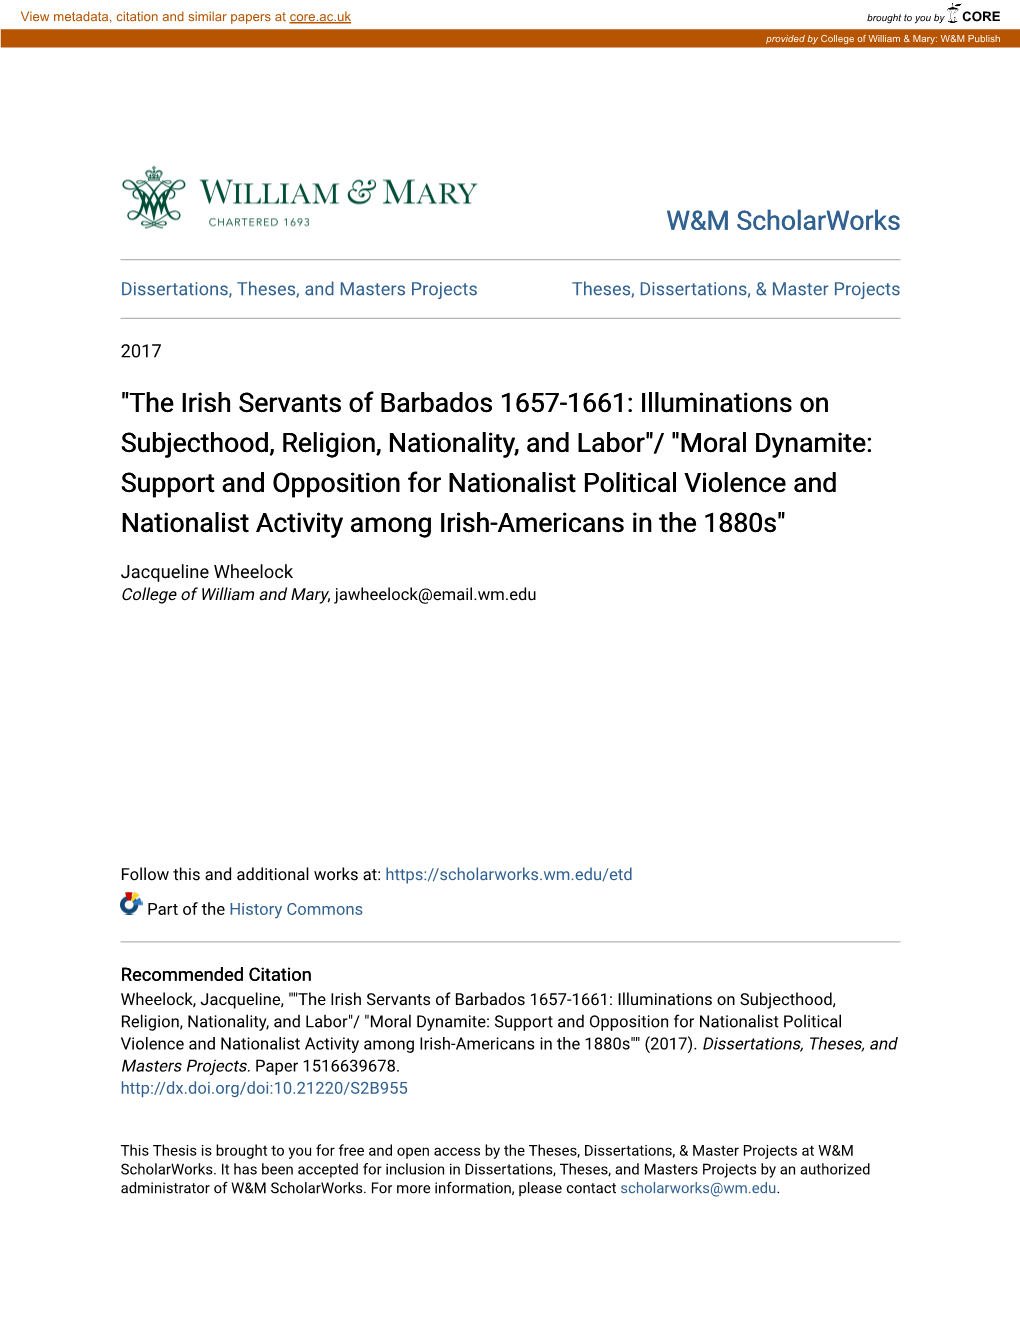 "The Irish Servants of Barbados 1657-1661: Illuminations On